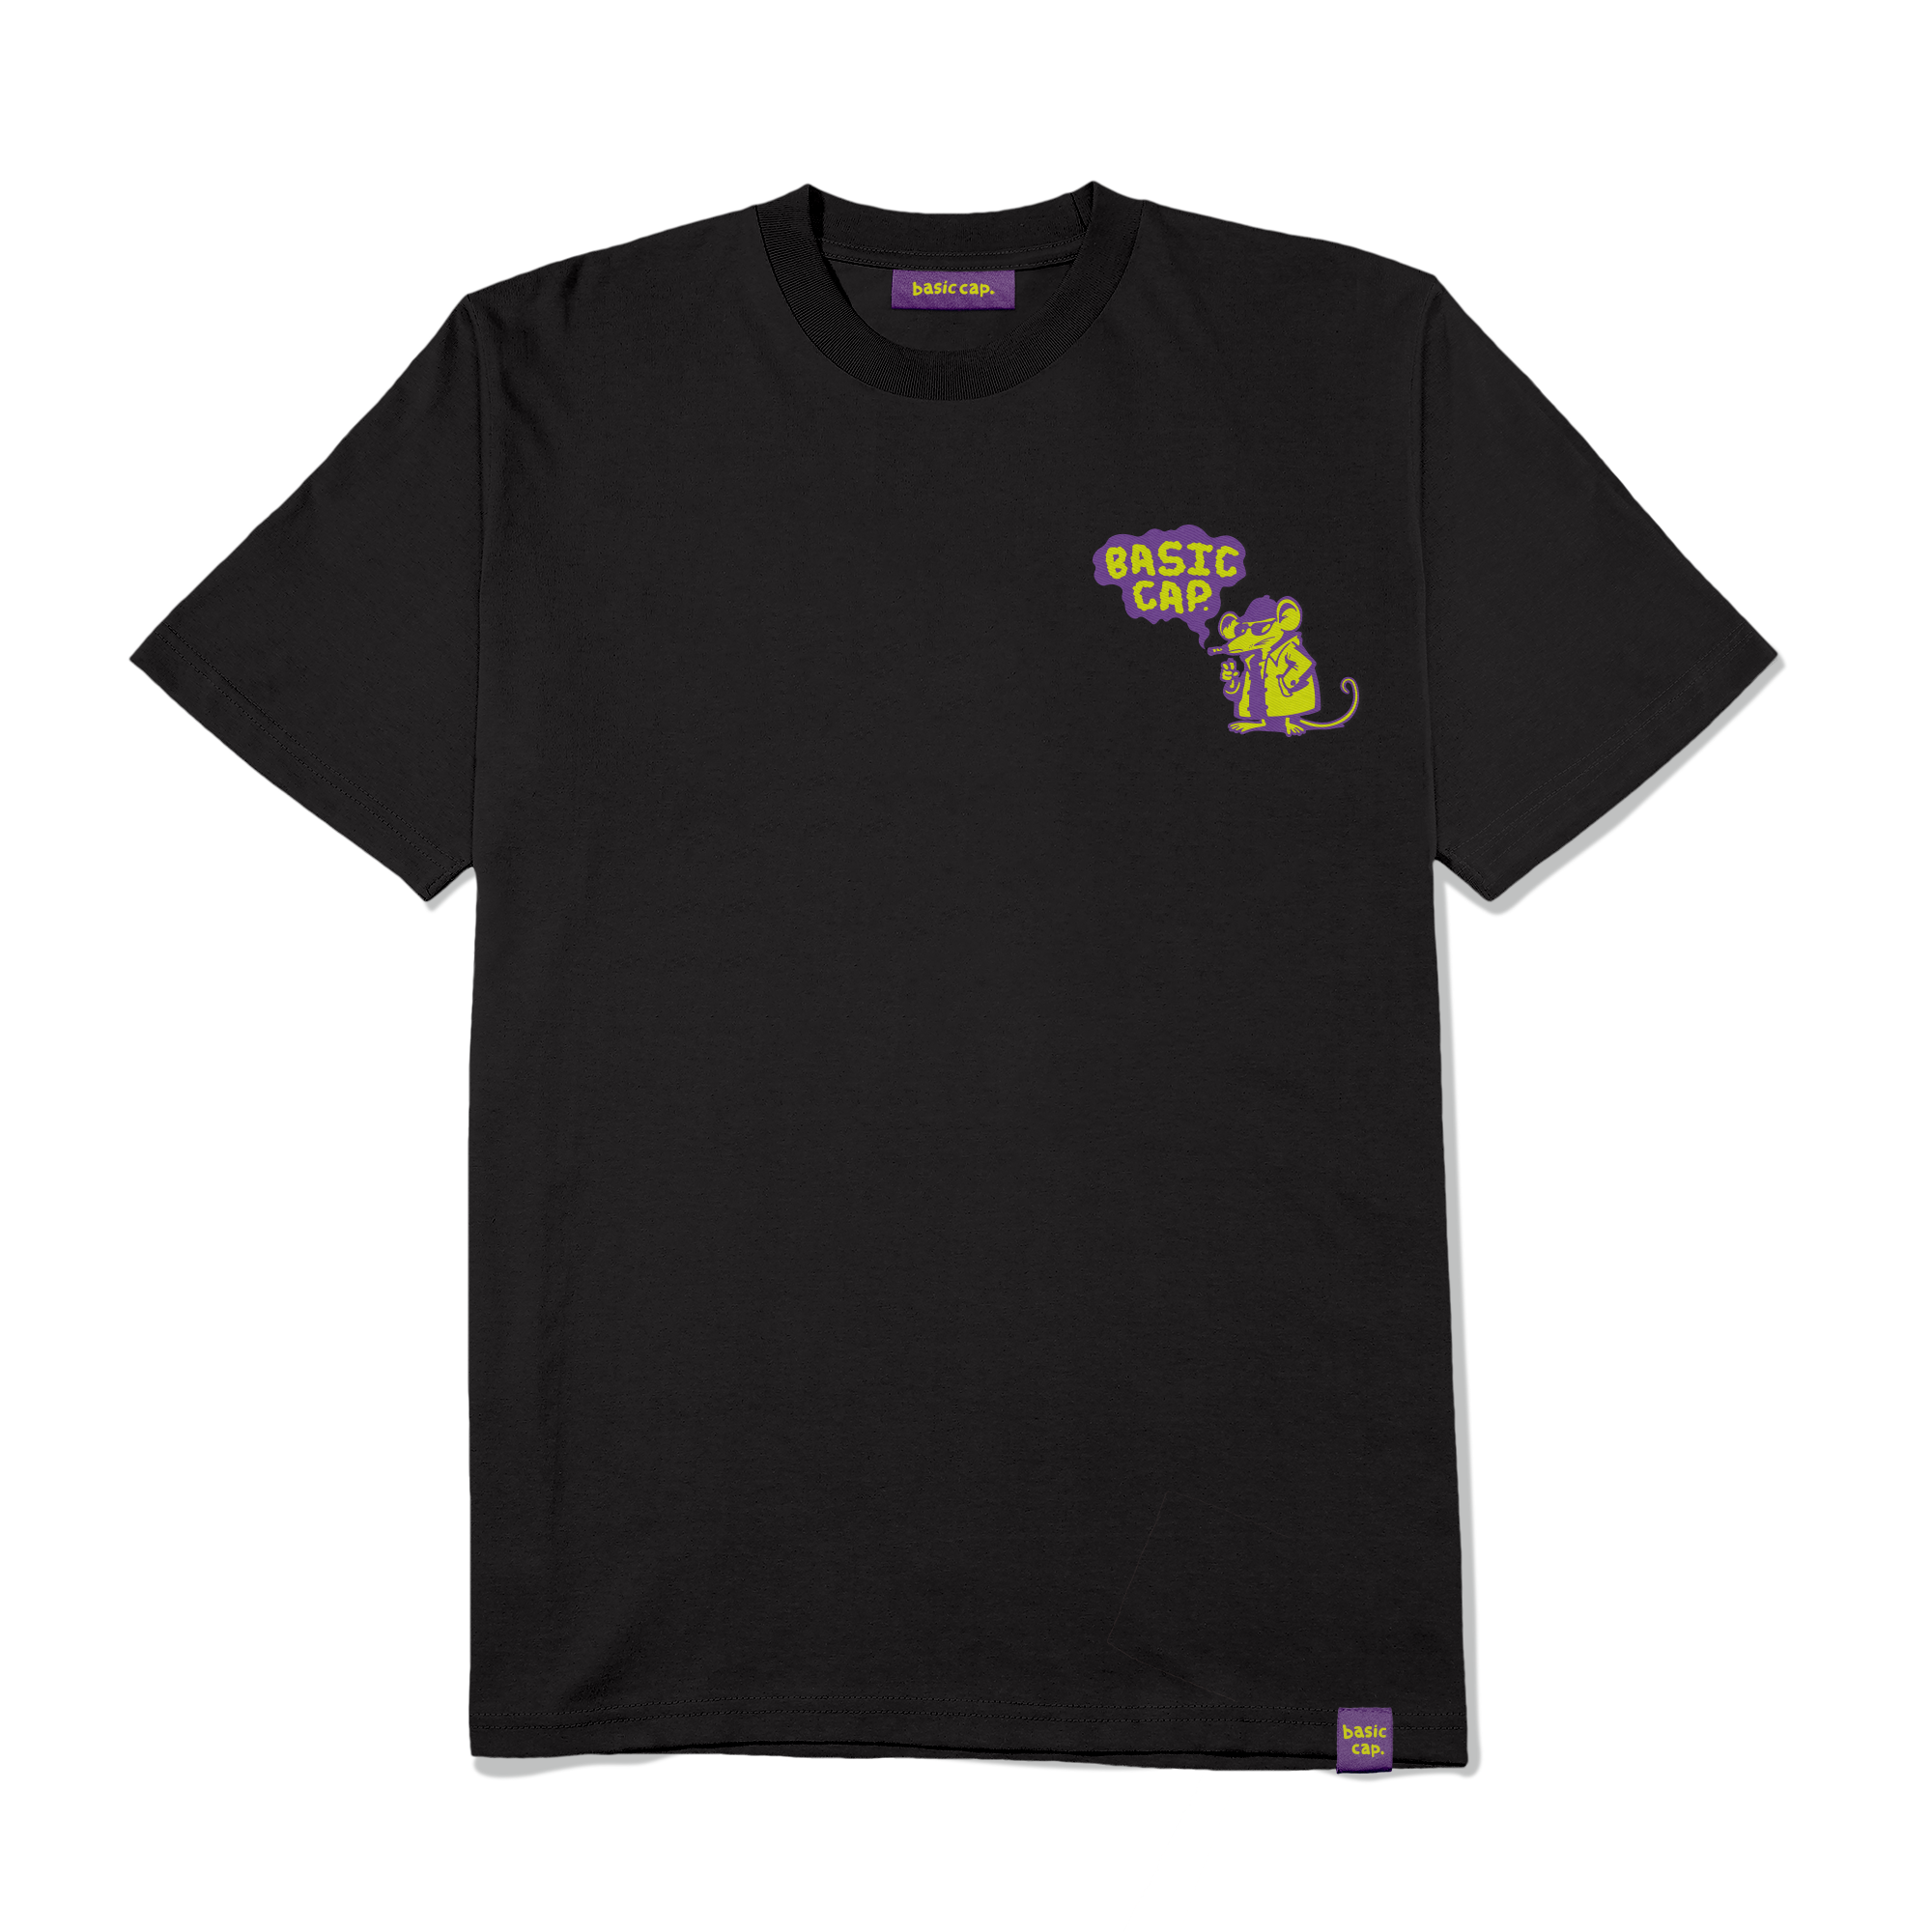 T-shirt Smoky Rat T-Shirt Smoky Rat tshirt - basic cap. 